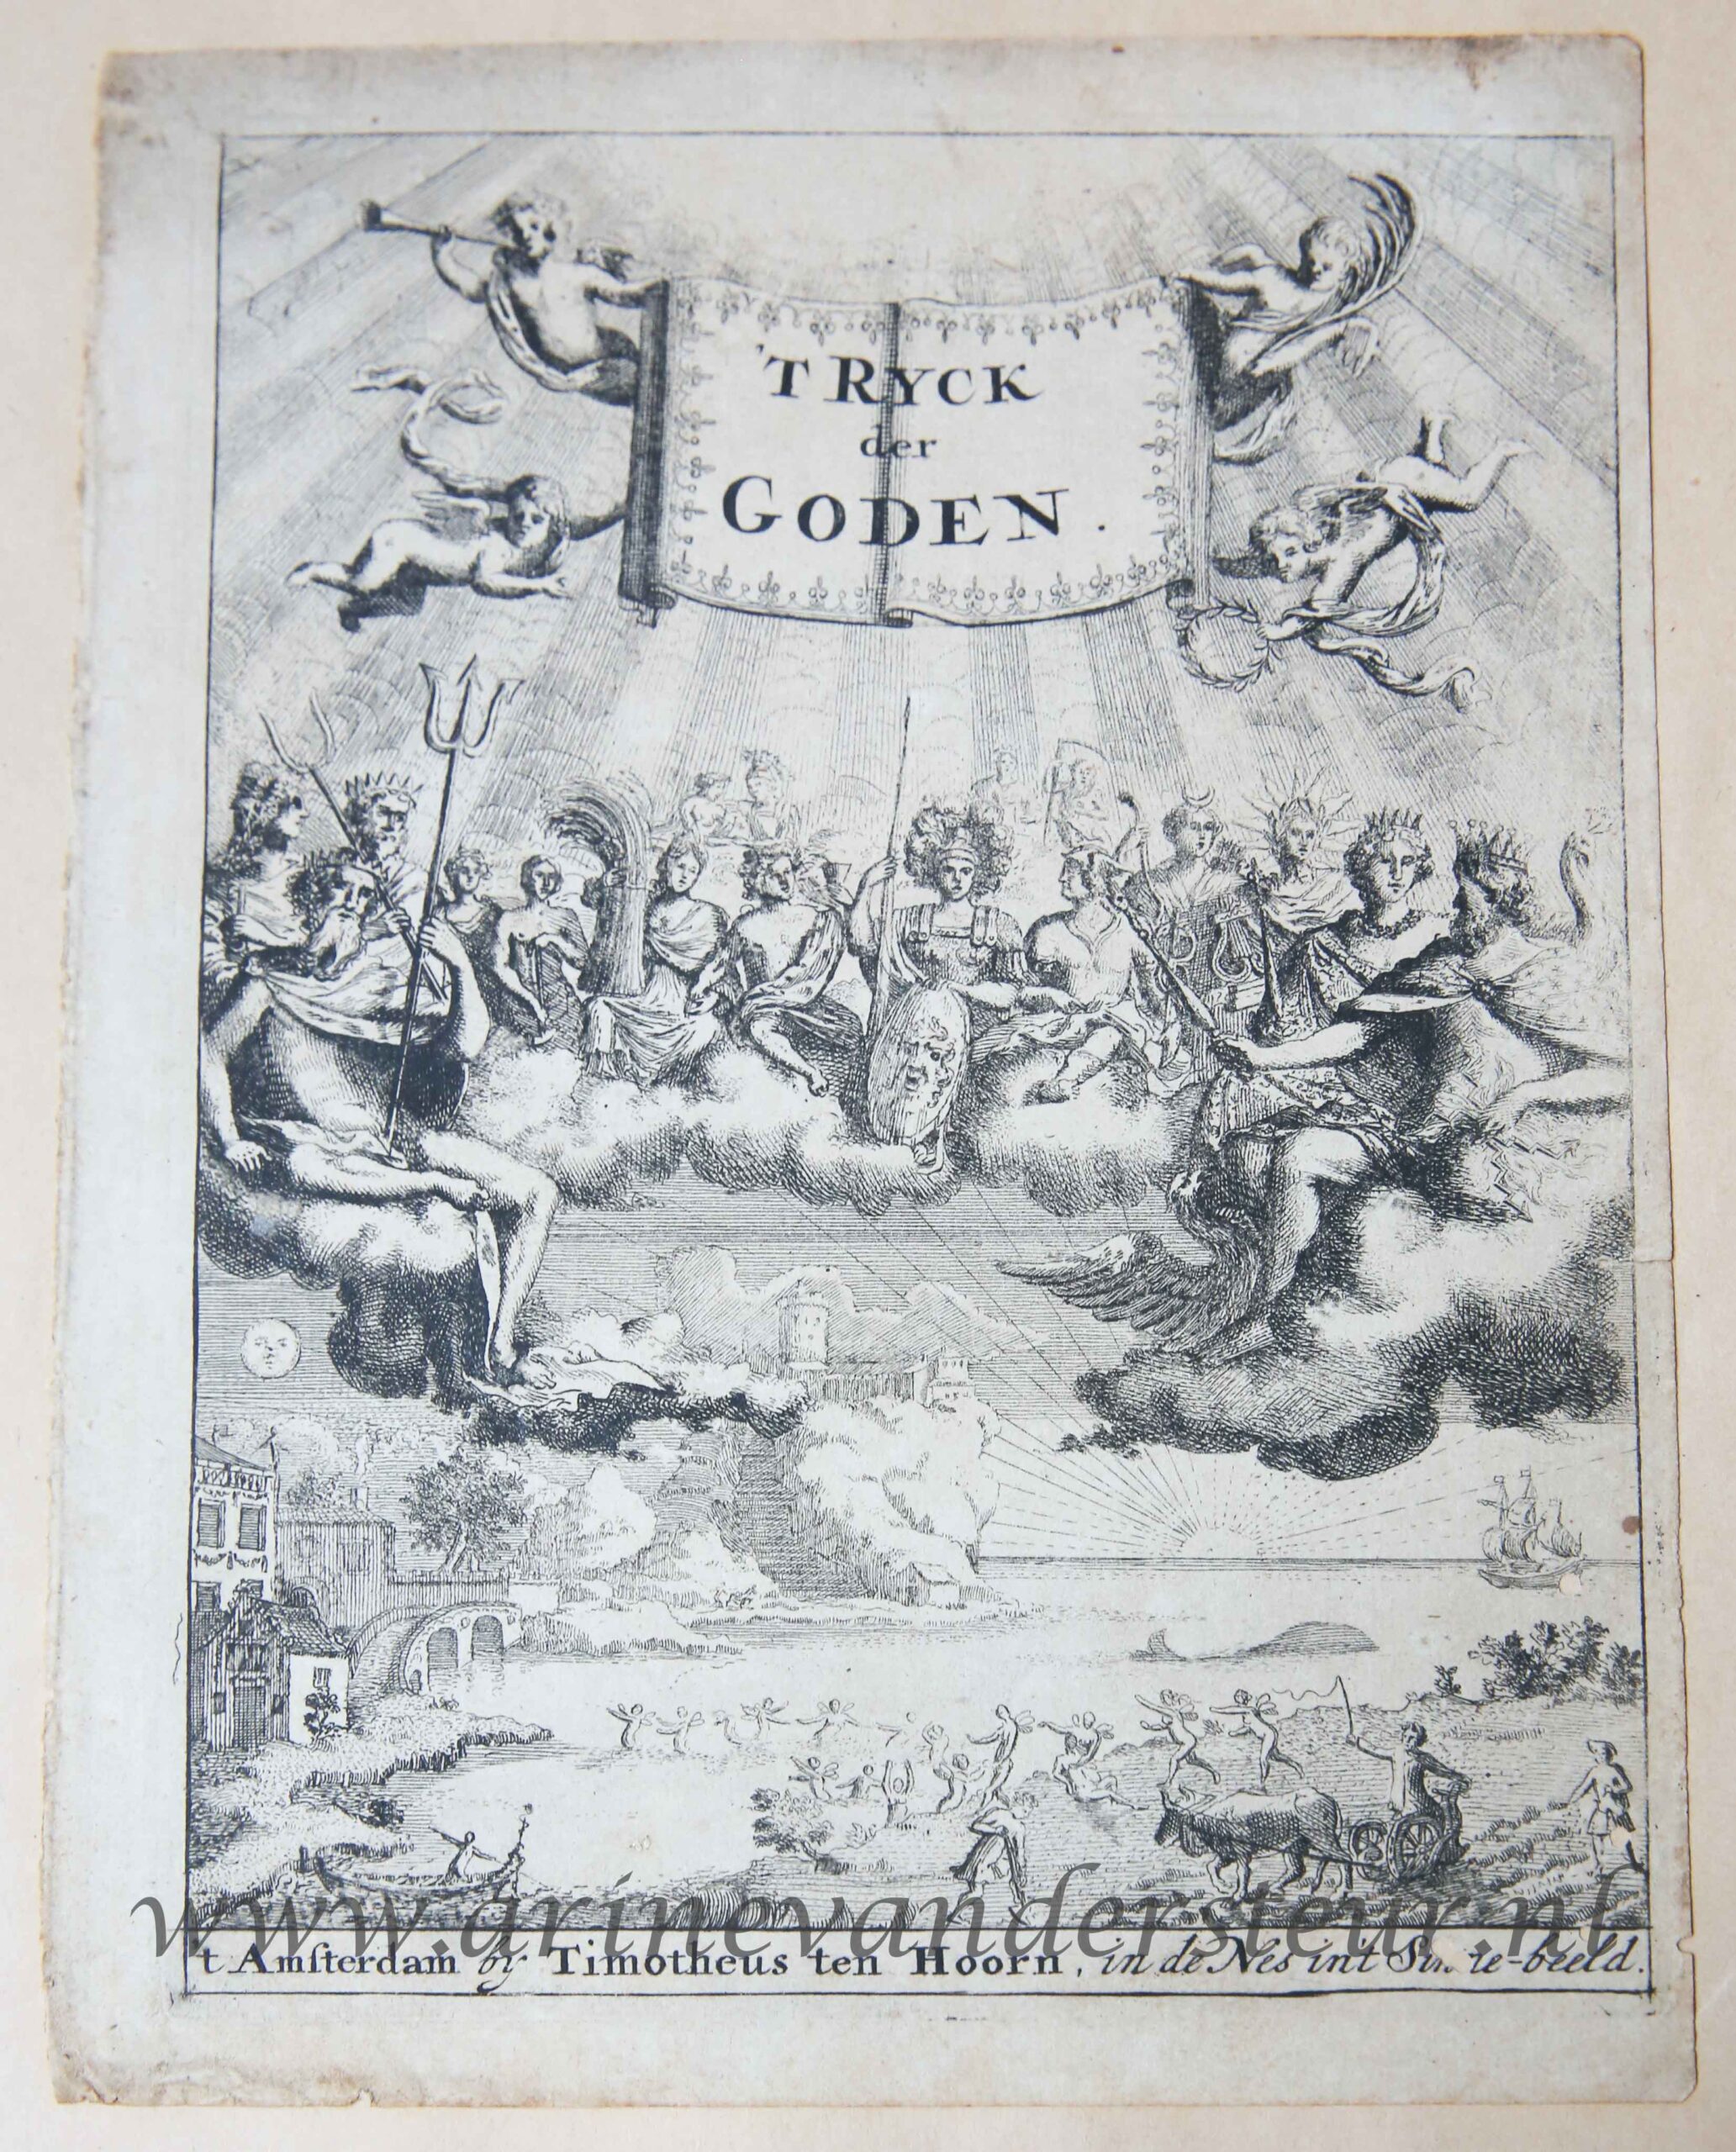 [Antique title page, 1686] 'T RYCK der GODEN, published 1686, 1 p.